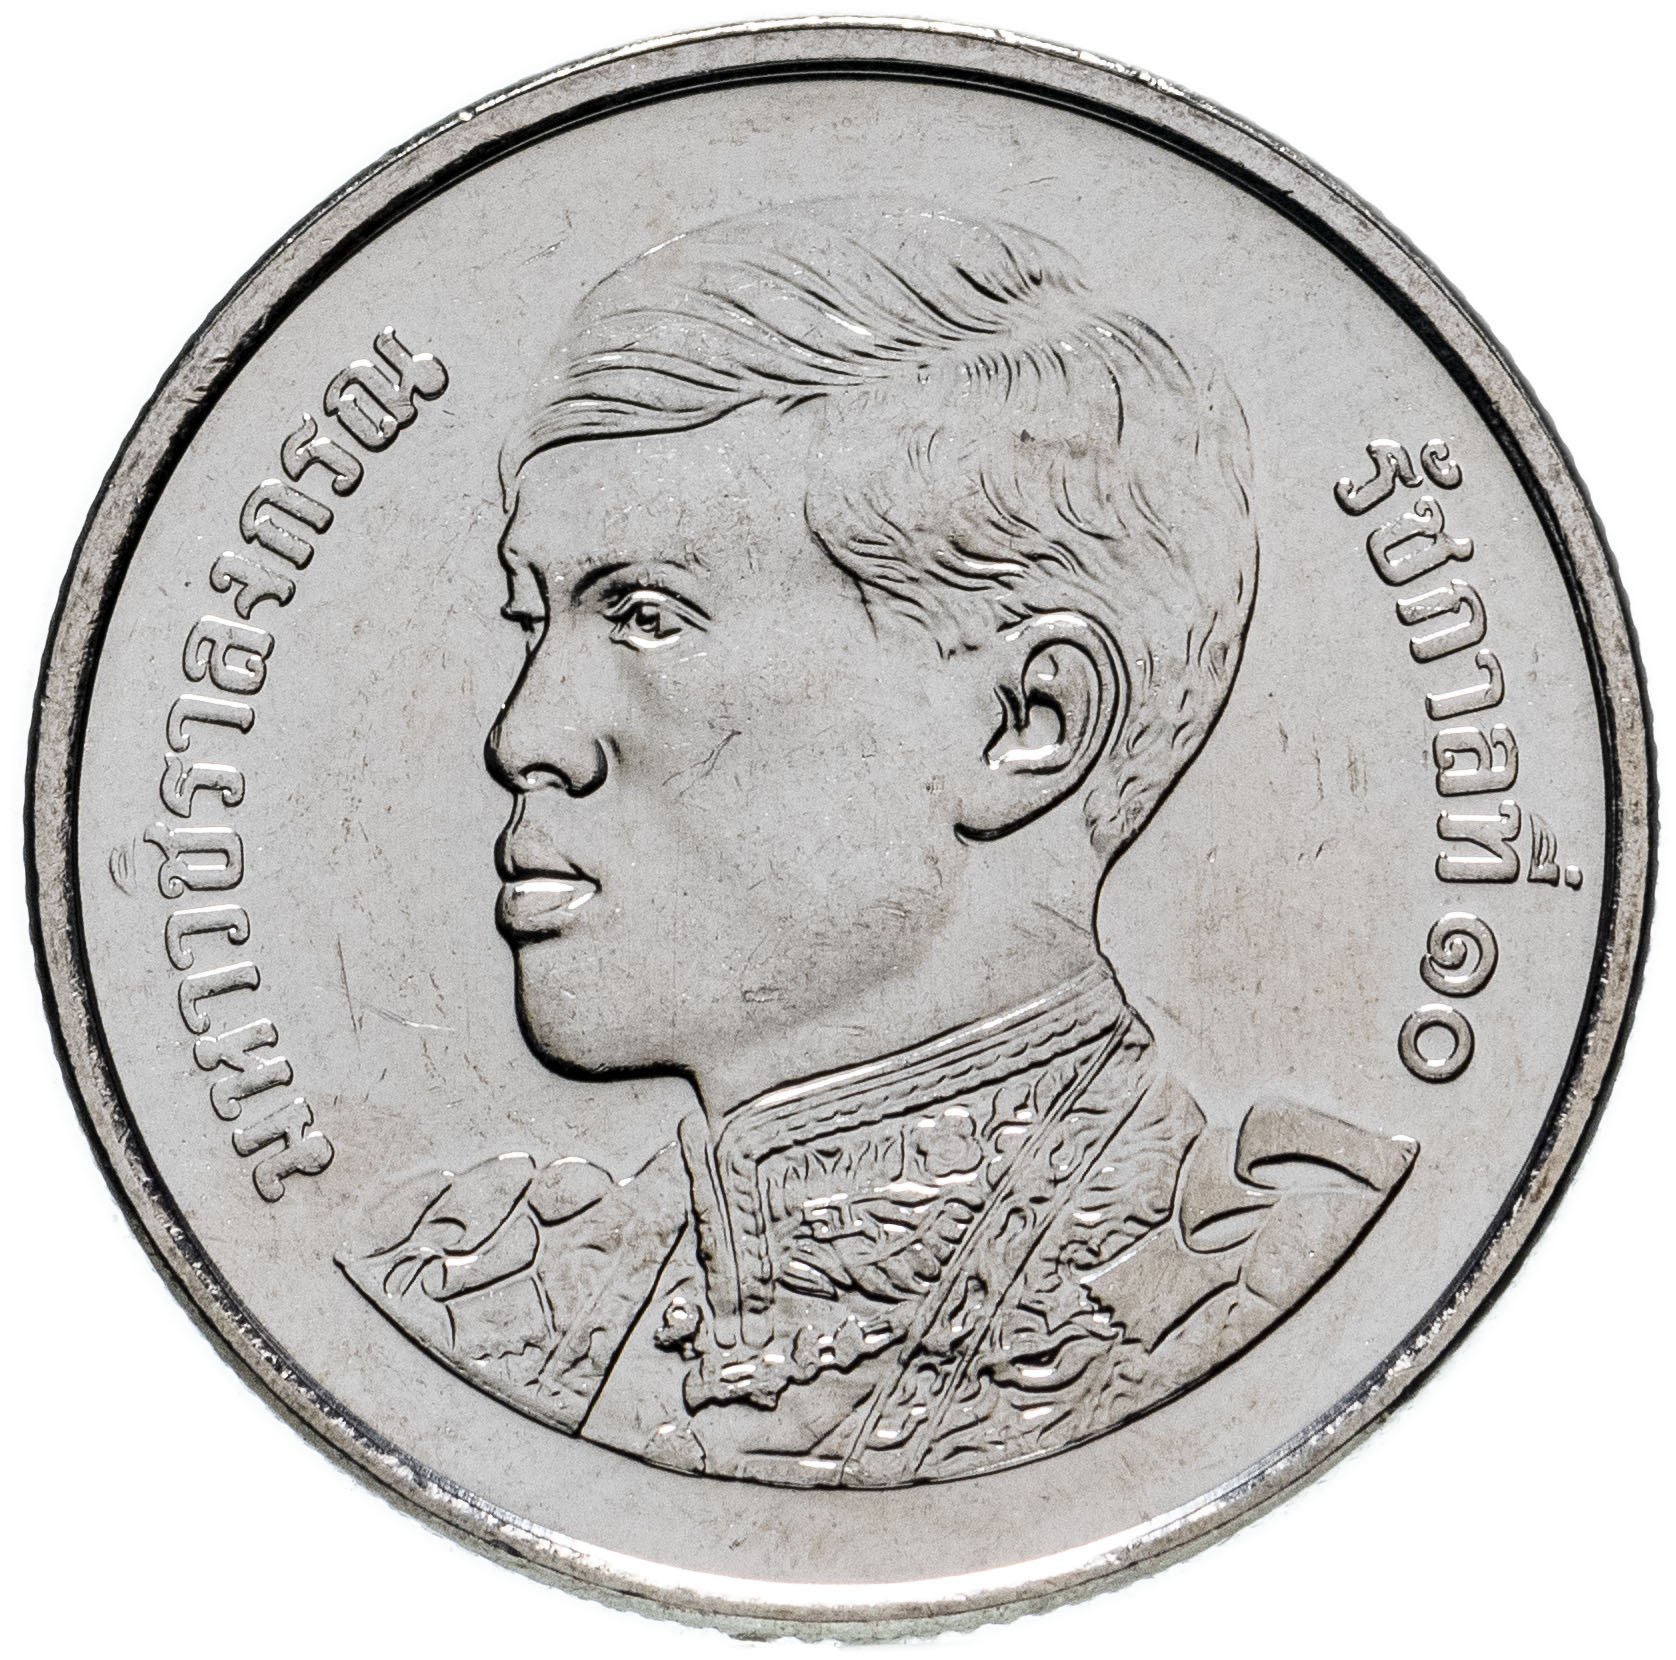 50000 батов в рублях. Таиландская монета 1 бат. Монета 5 бат Таиланд. Таиланд 1 бат (baht) 2018.. Монетка Тайланд 5 бат.